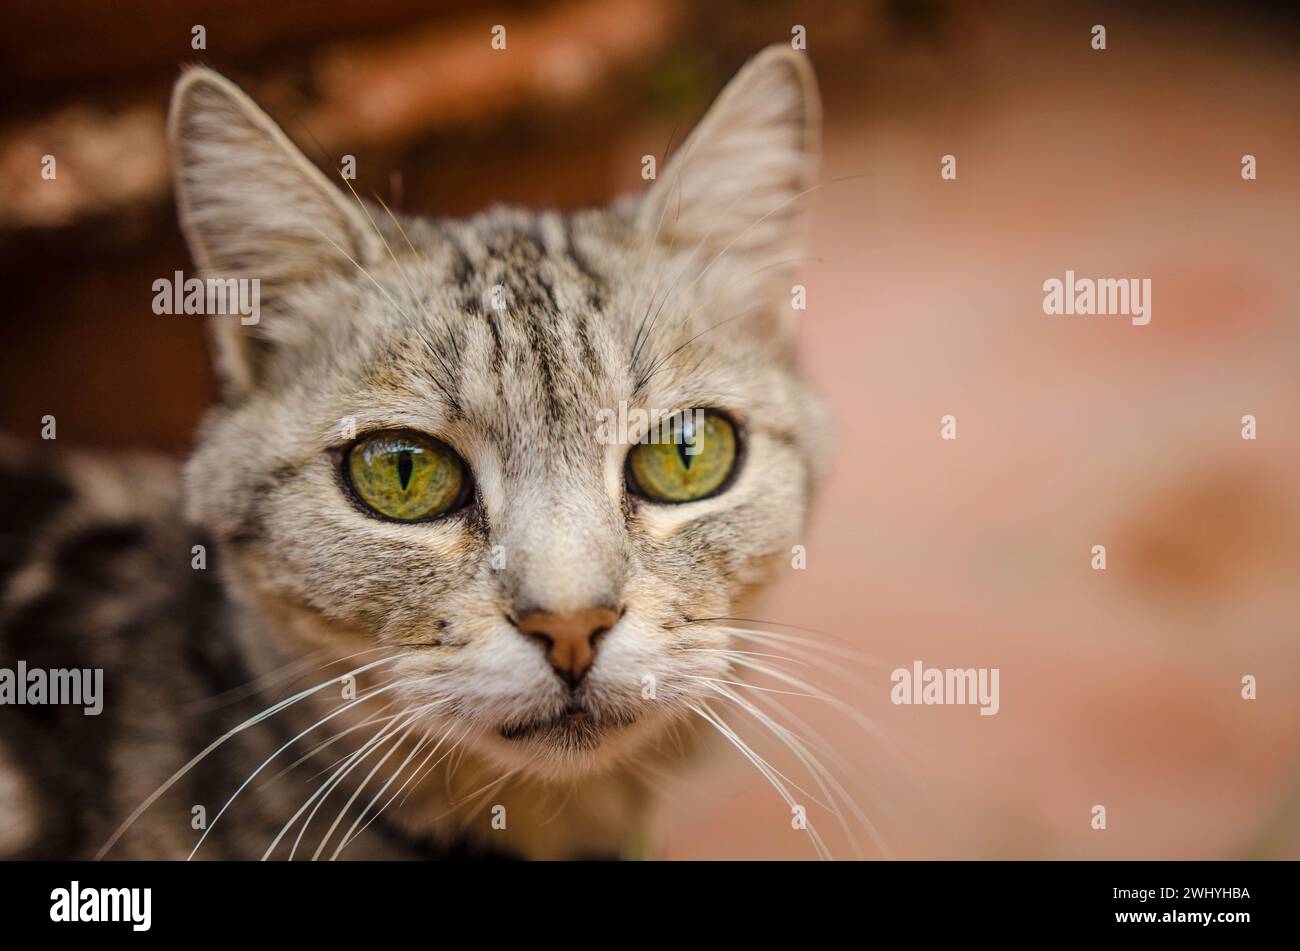 Close-up eyes, Macro photography, Gray cat, Black stripes, Cat's gaze, Feline eyes, Intense stare Stock Photo